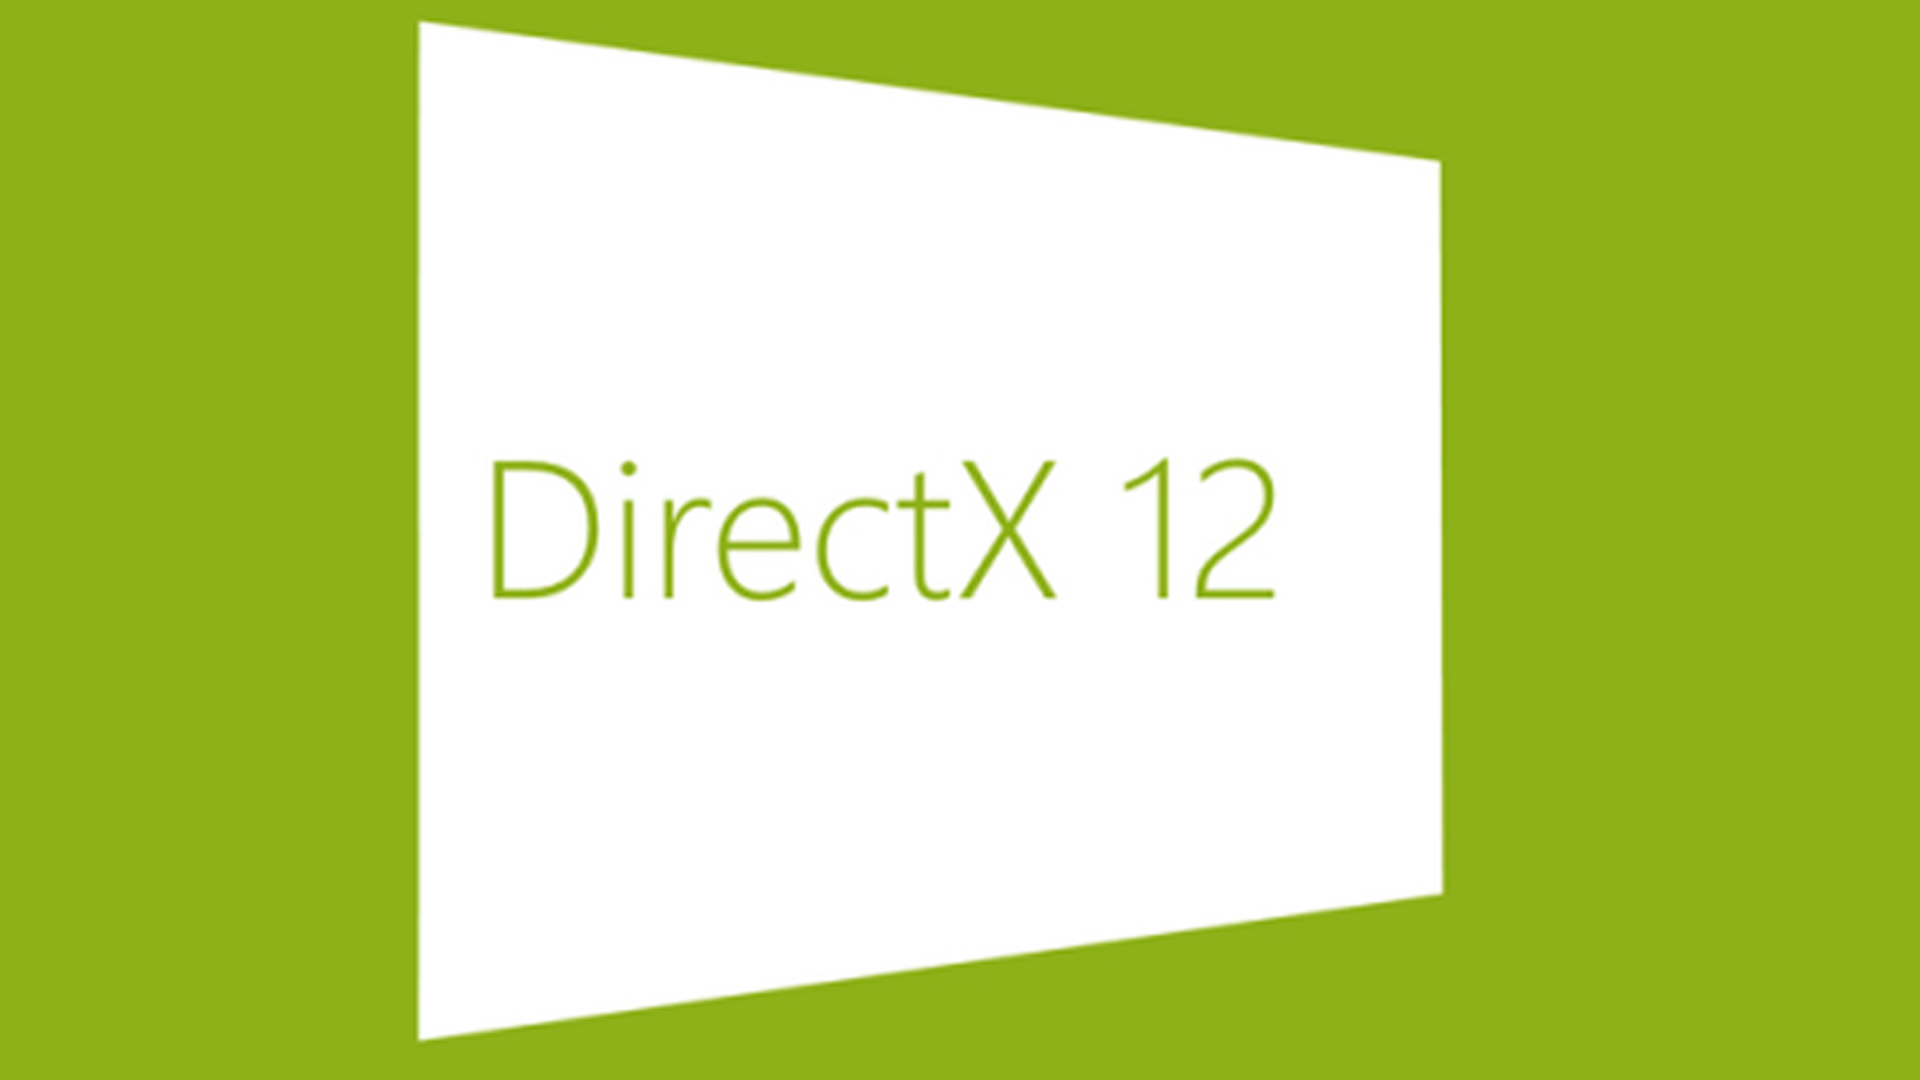 directx version 12 for windows 10